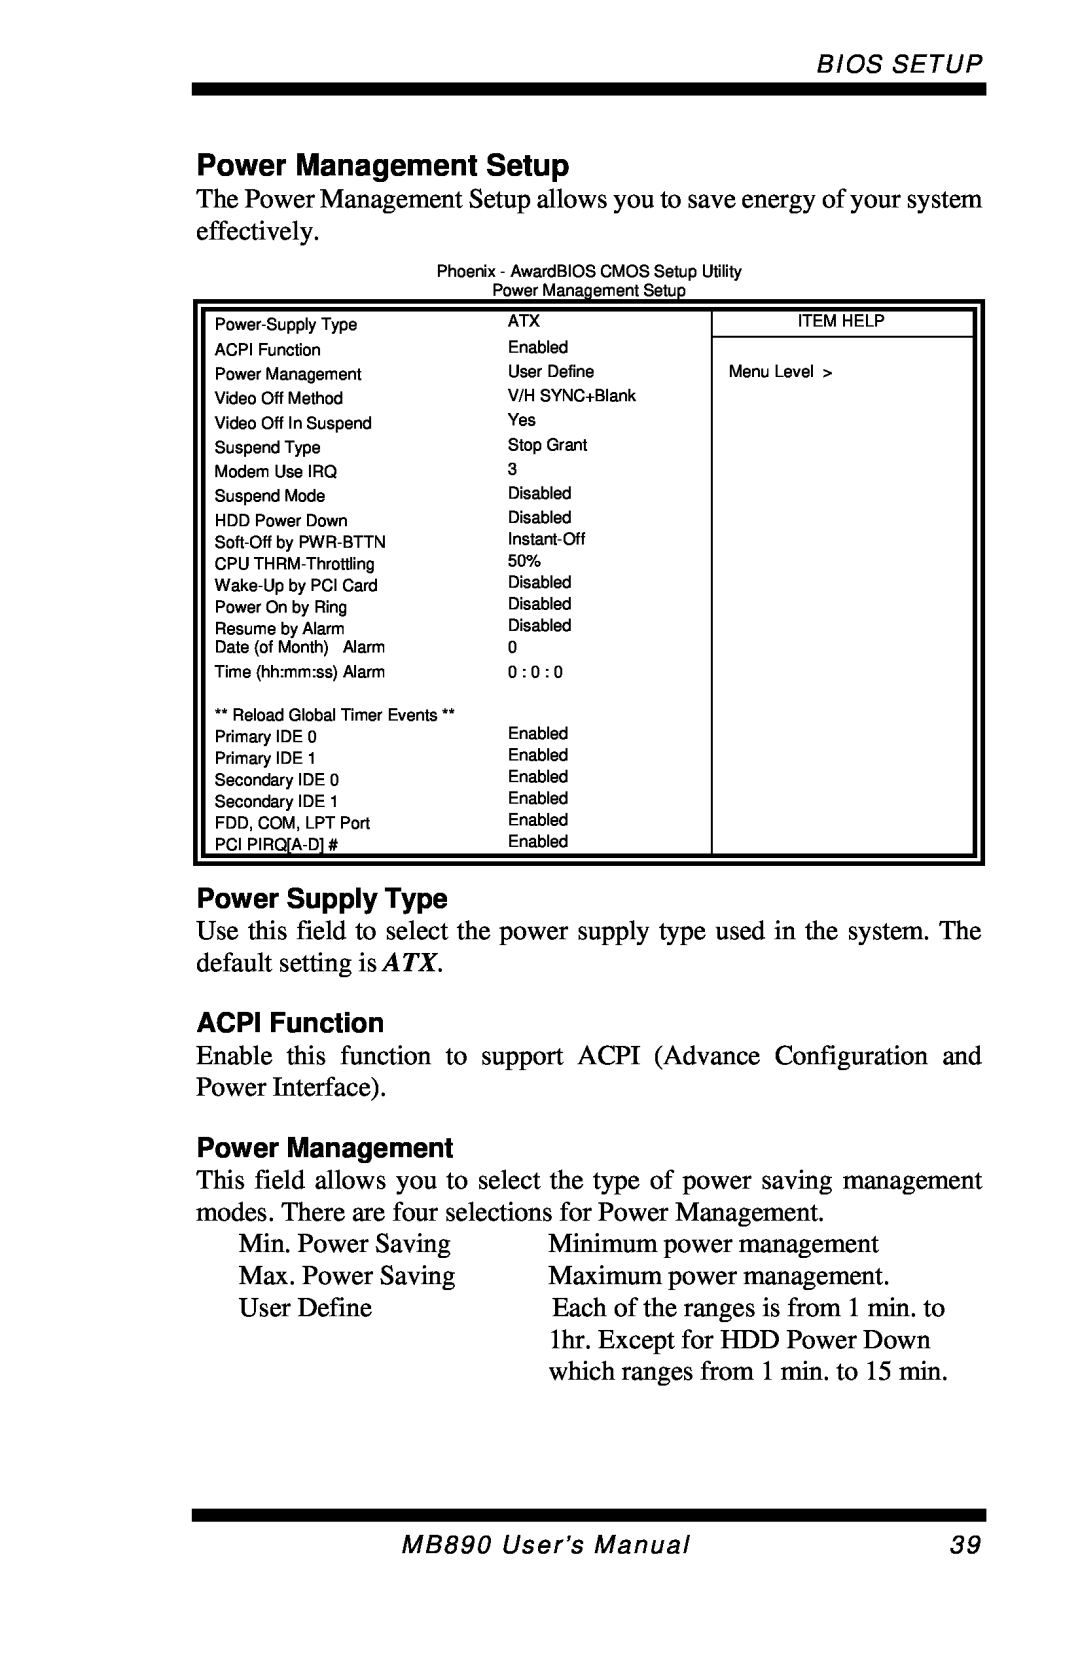 Intel MB890 user manual Power Management Setup, Power Supply Type, ACPI Function 